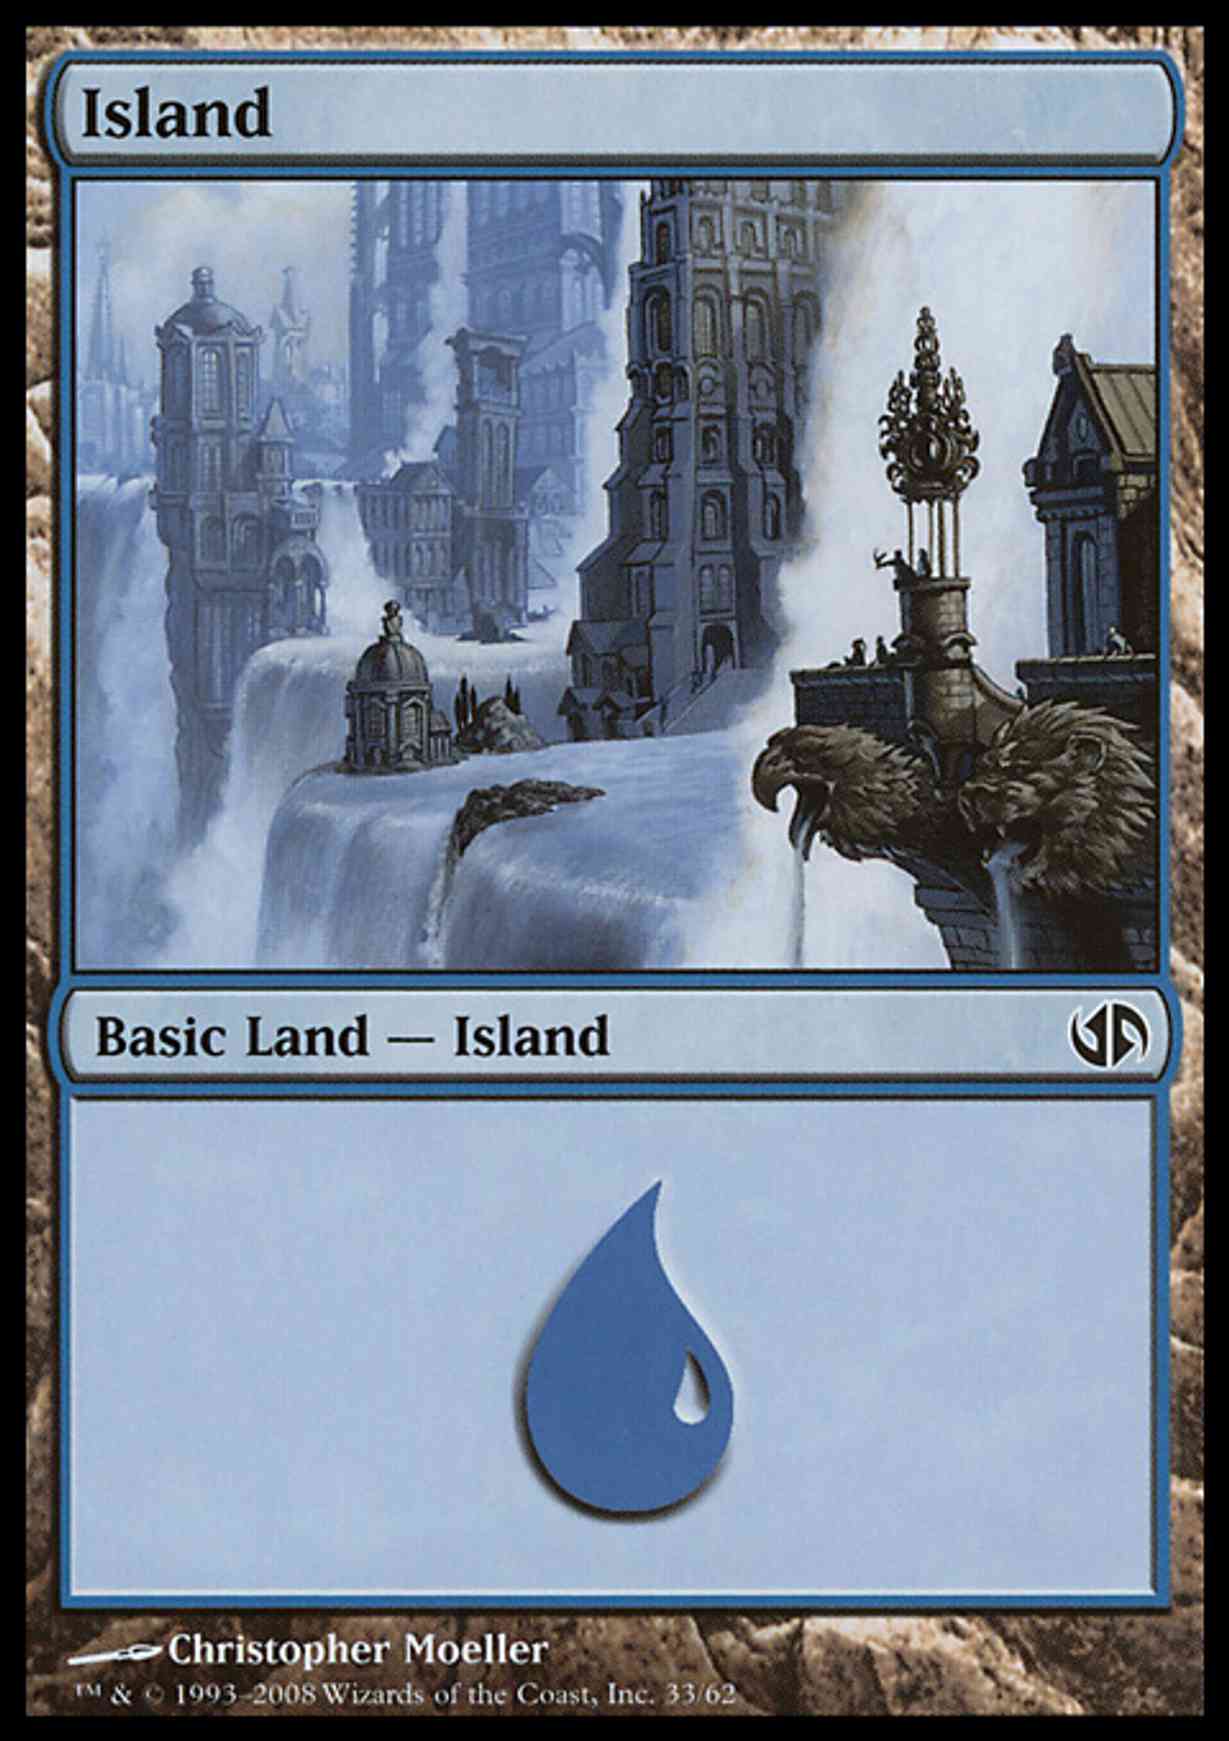 Island (33)  magic card front